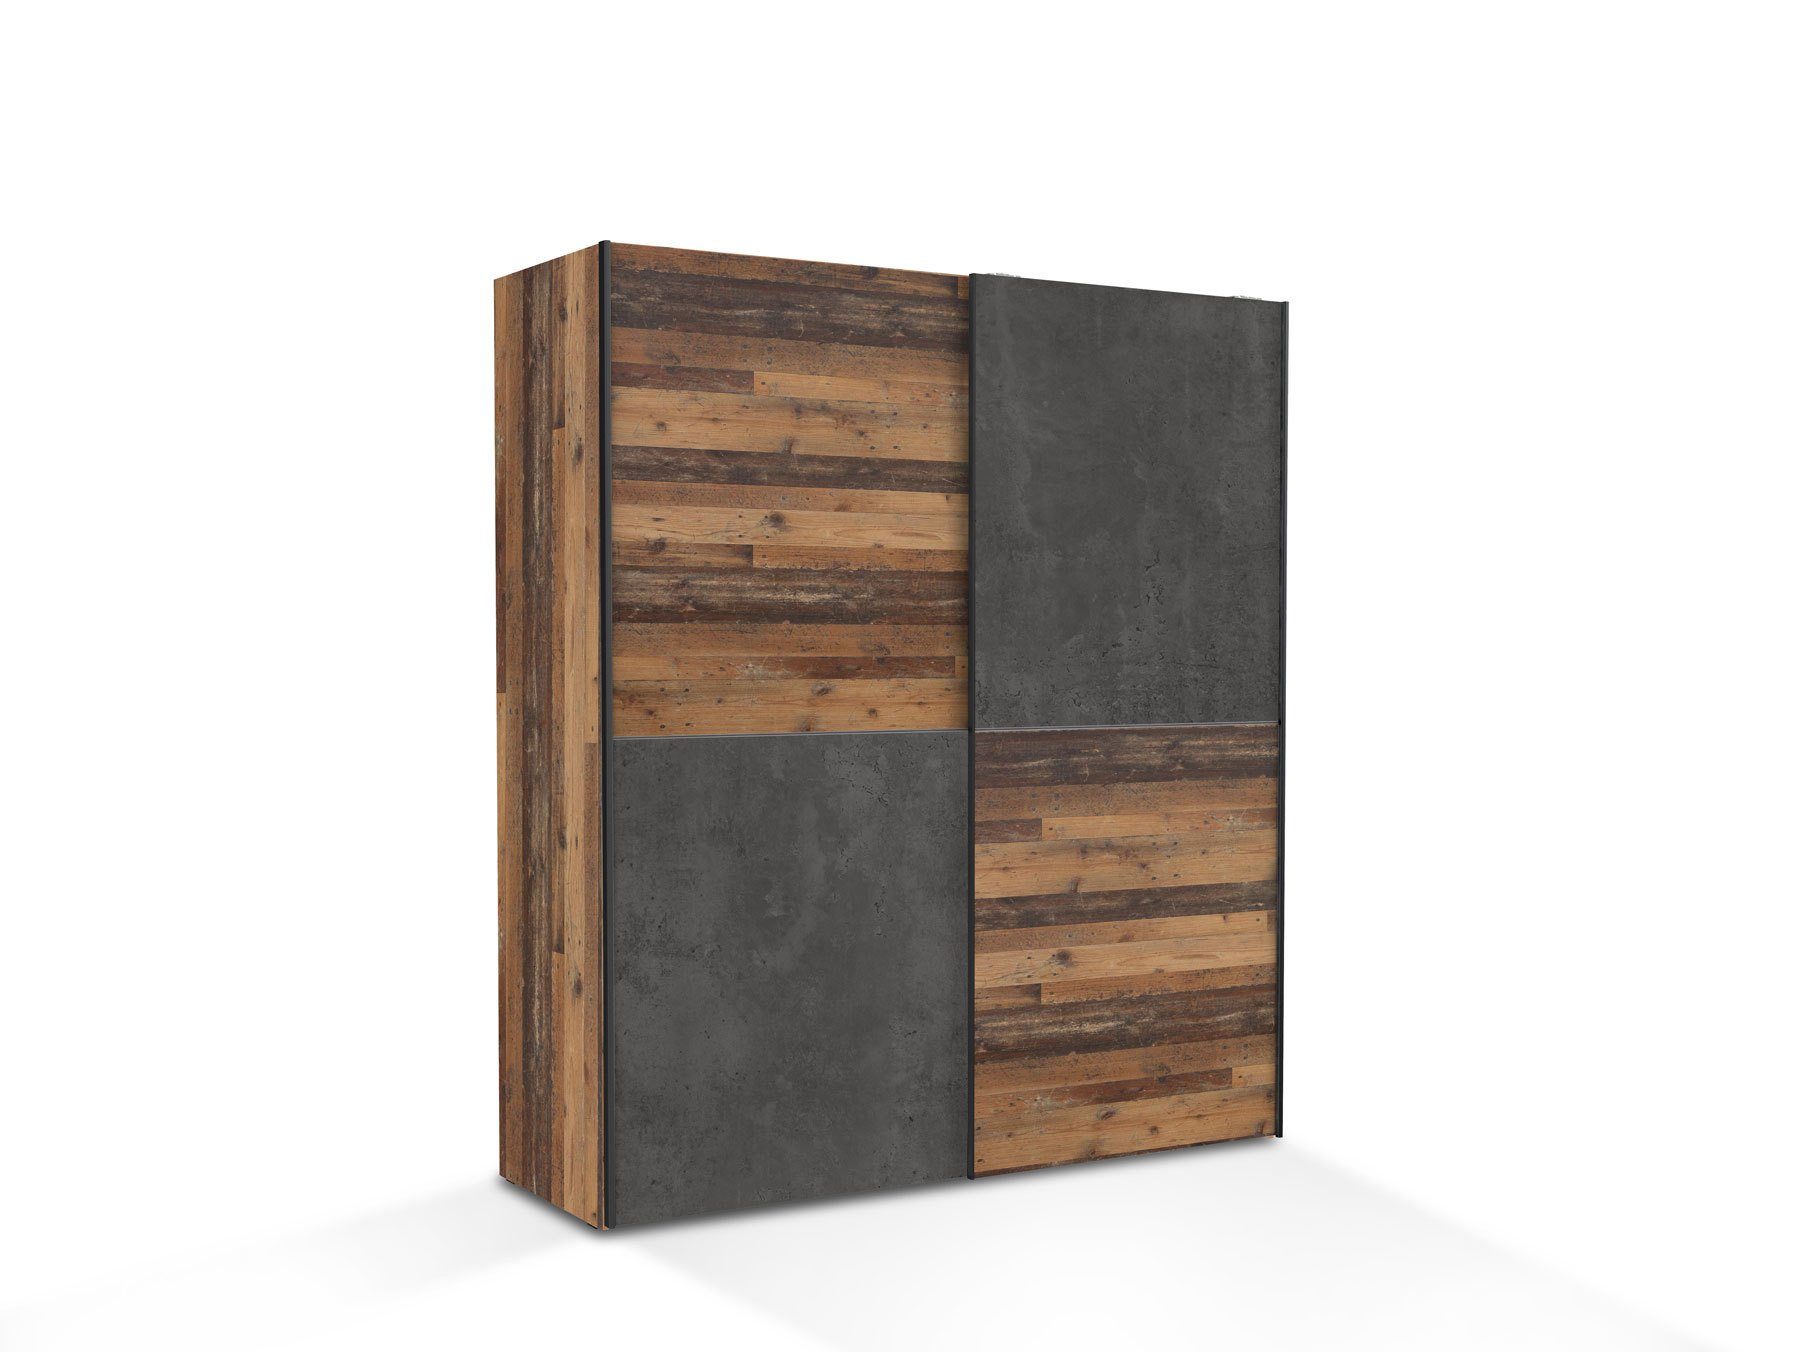 Wood DELKO Dekorspanplatte, Old Schwebetürenschrank, vintagefarbig/dunkelgrau Moebel-Eins Material Schiebetürenschrank